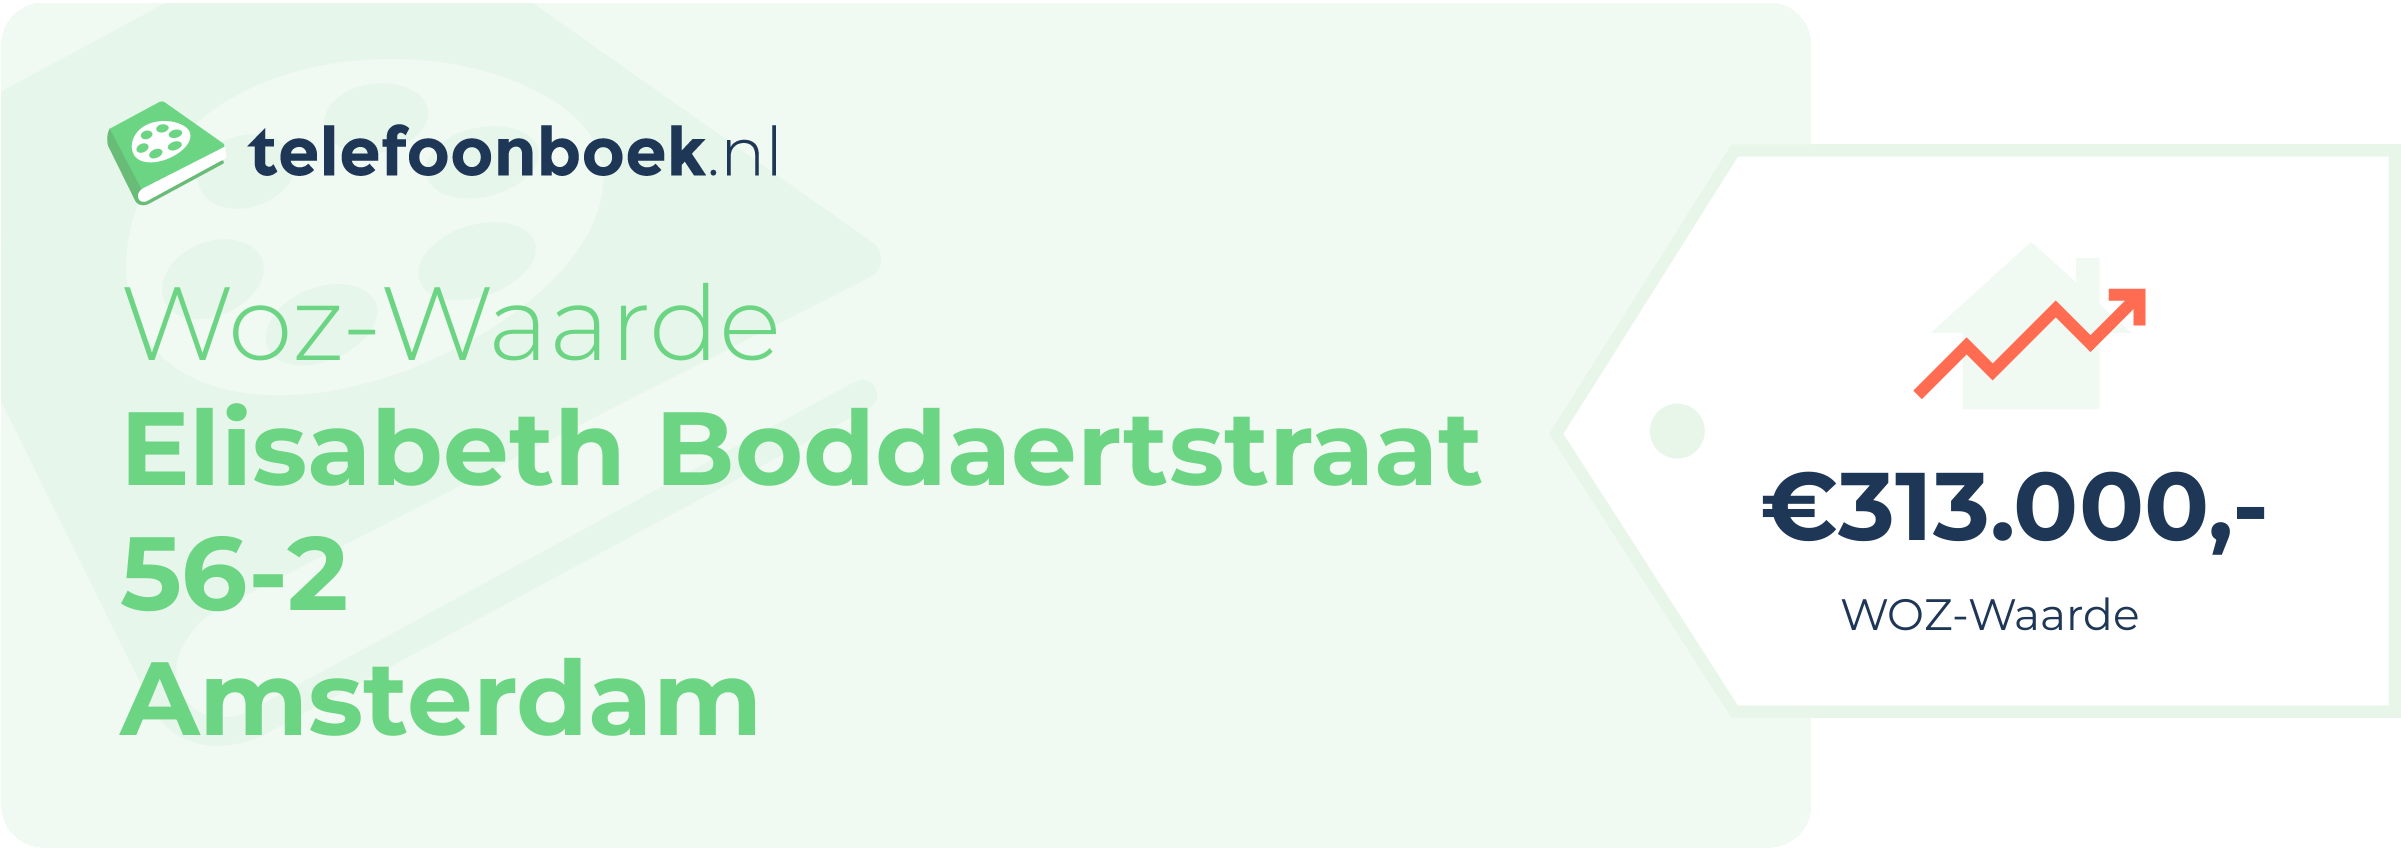 WOZ-waarde Elisabeth Boddaertstraat 56-2 Amsterdam